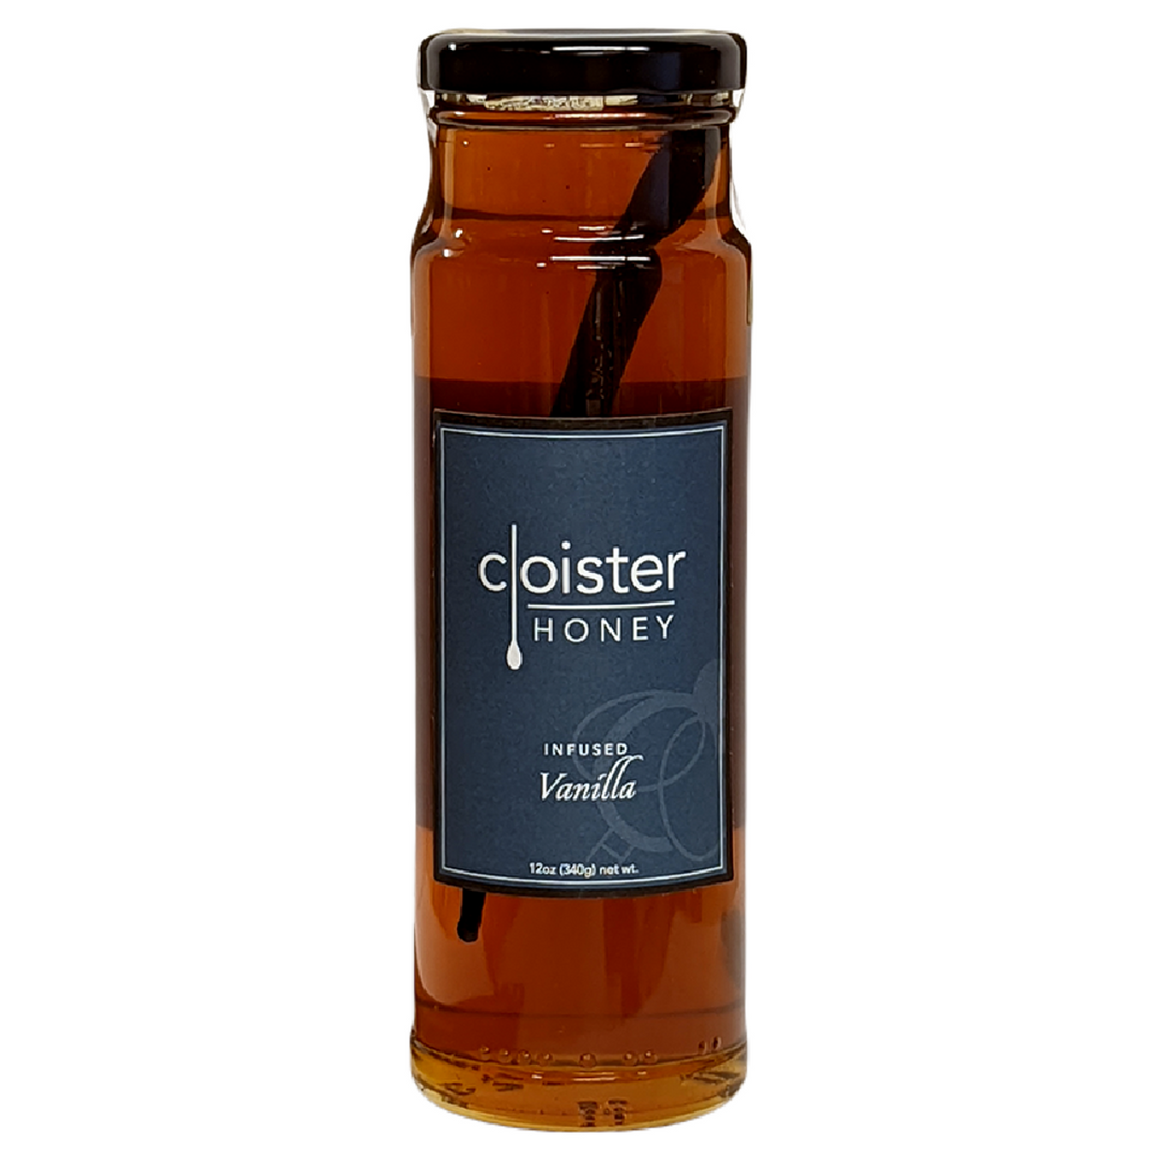 Cloister Vanilla Infused Honey - 12 oz